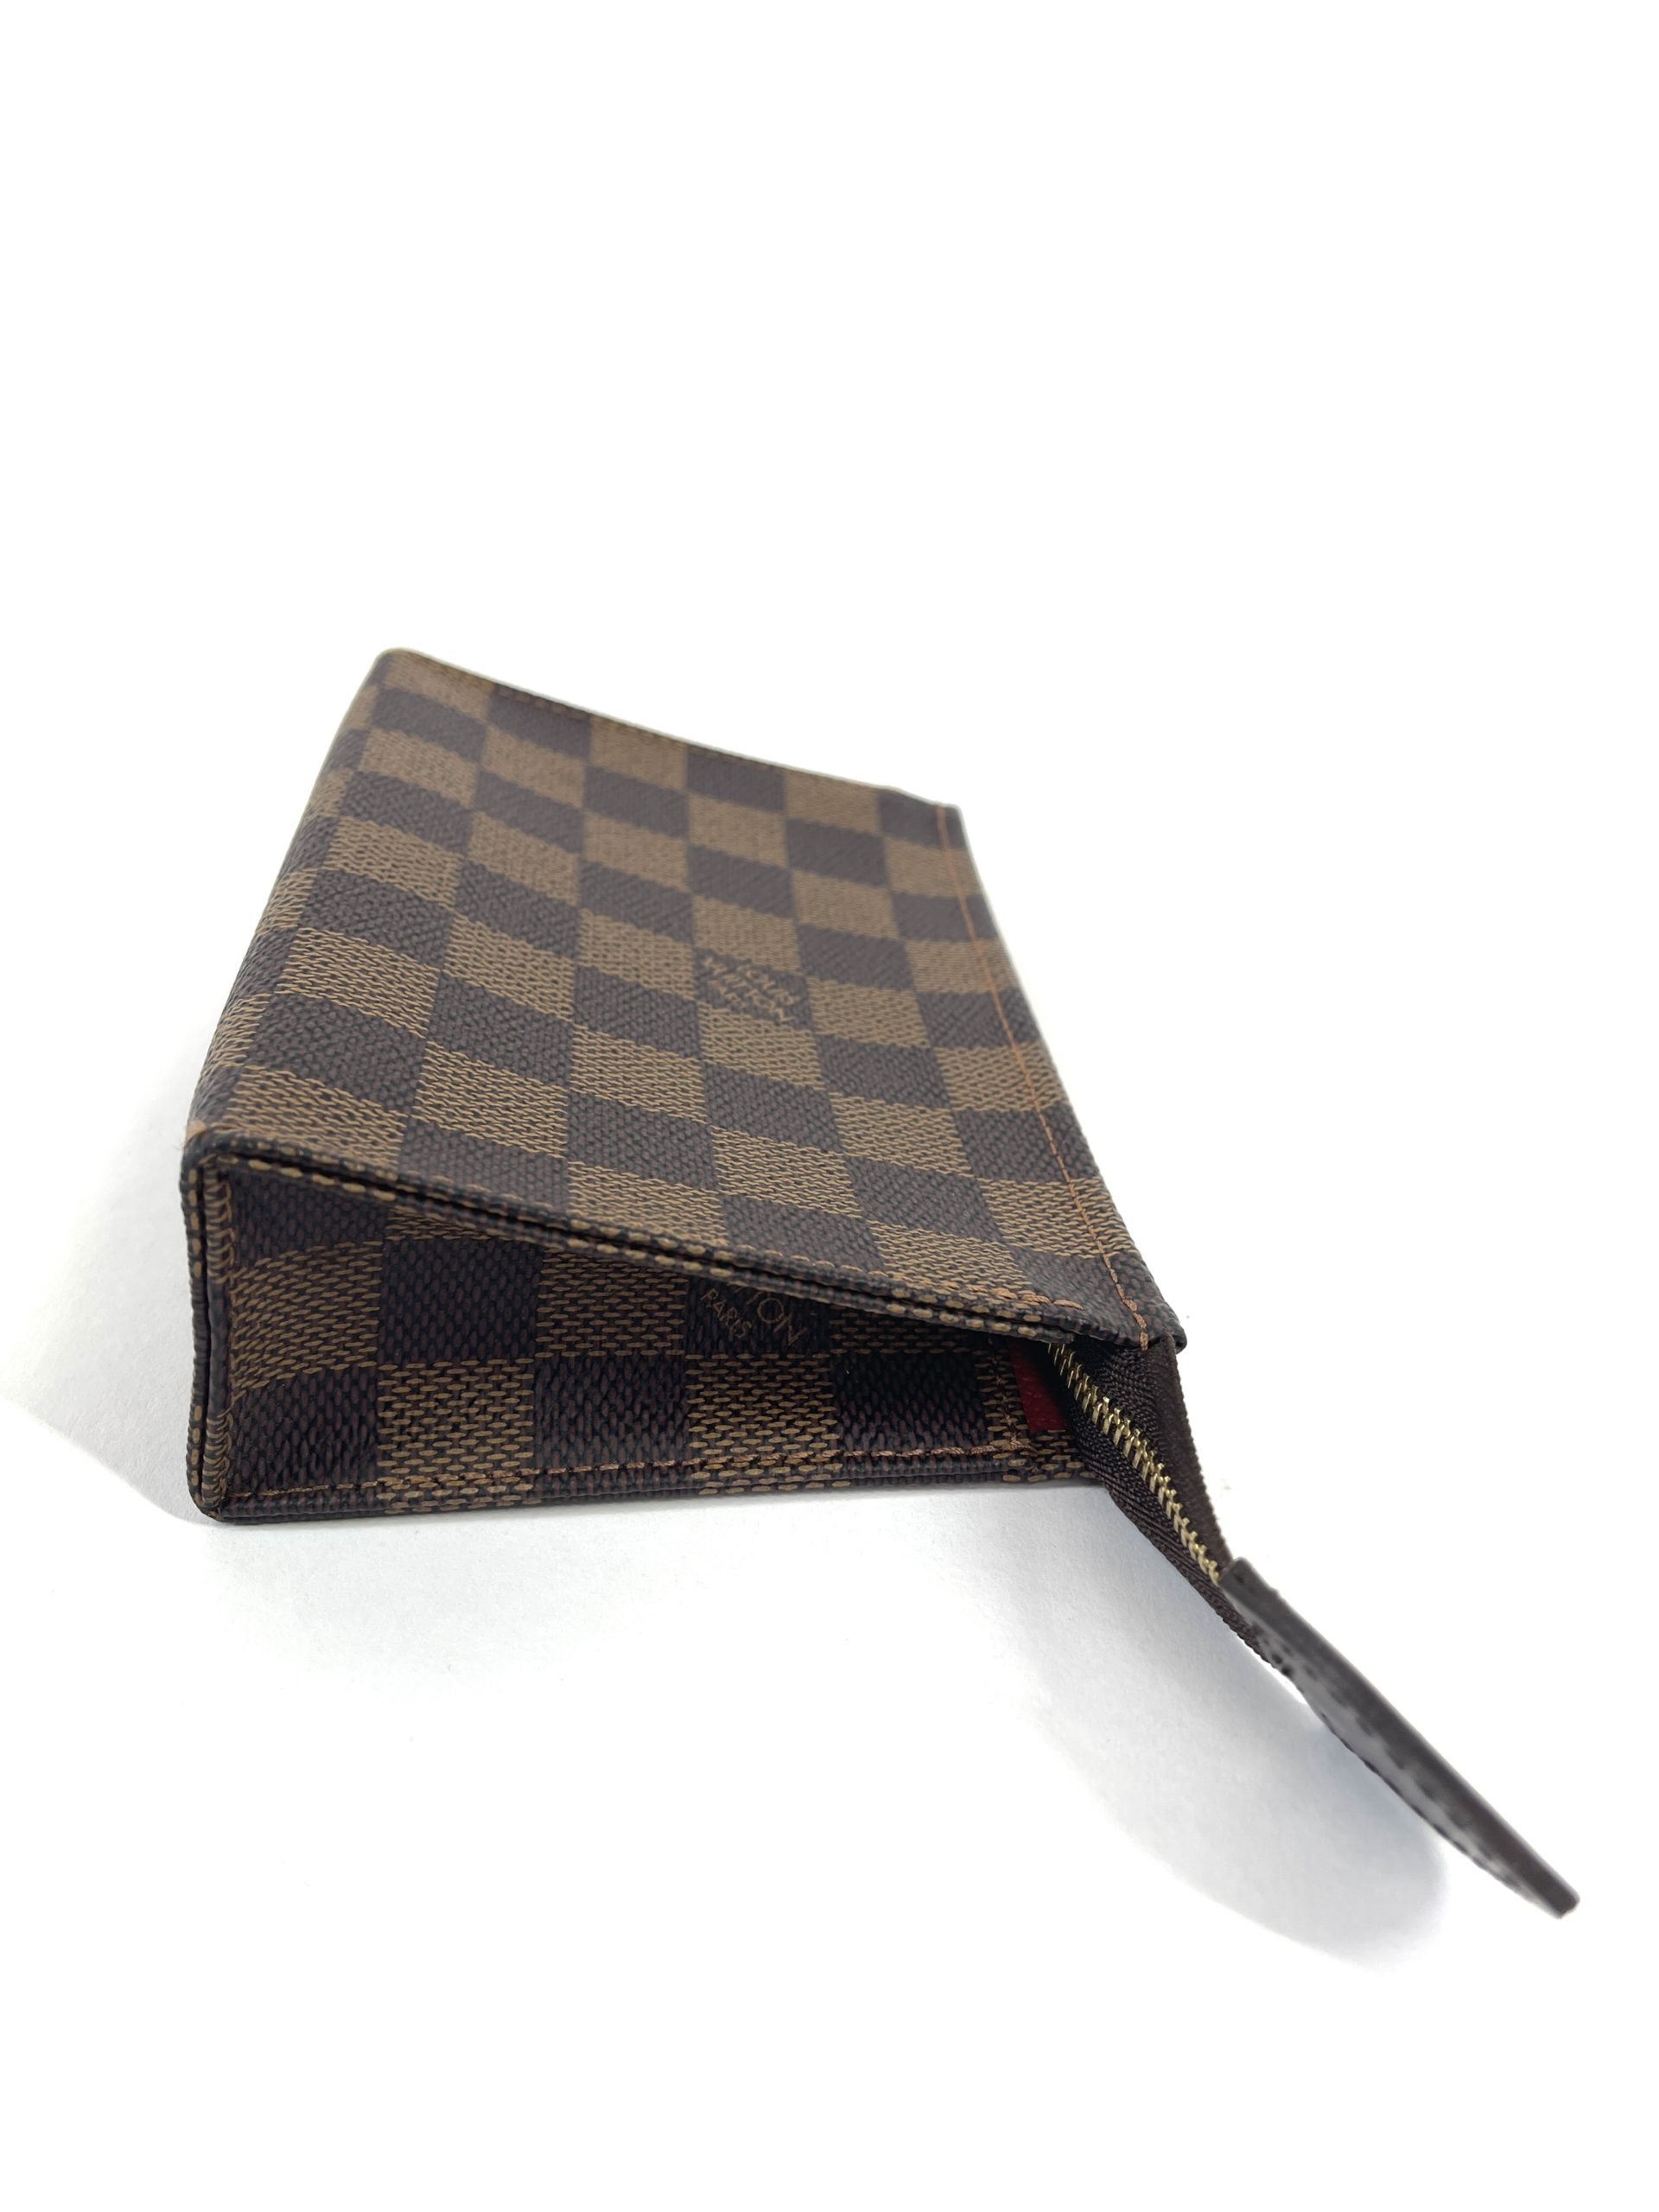 Shop Louis Vuitton Cosmetic pouch (M47515, N60024, N47516) by BeBeauty